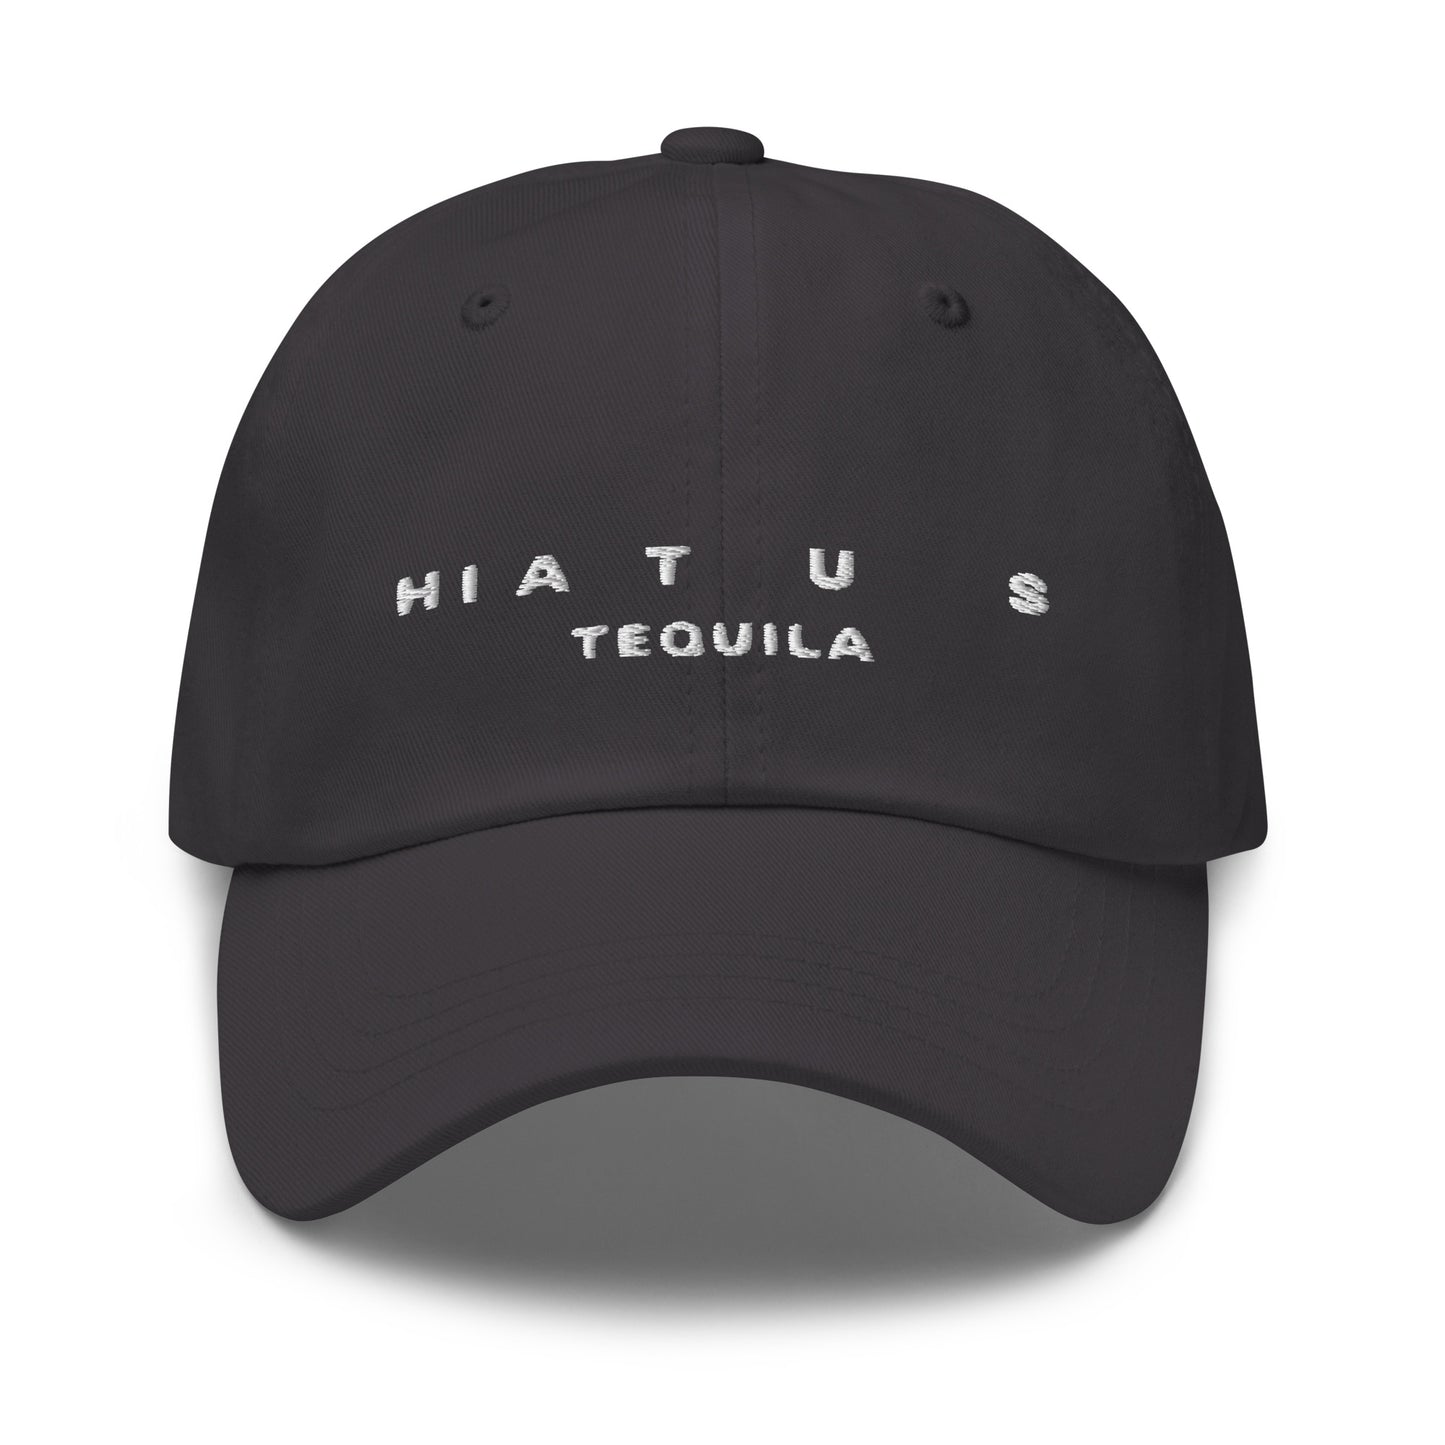 Hiatus Tequila's not your dad's Dad hat